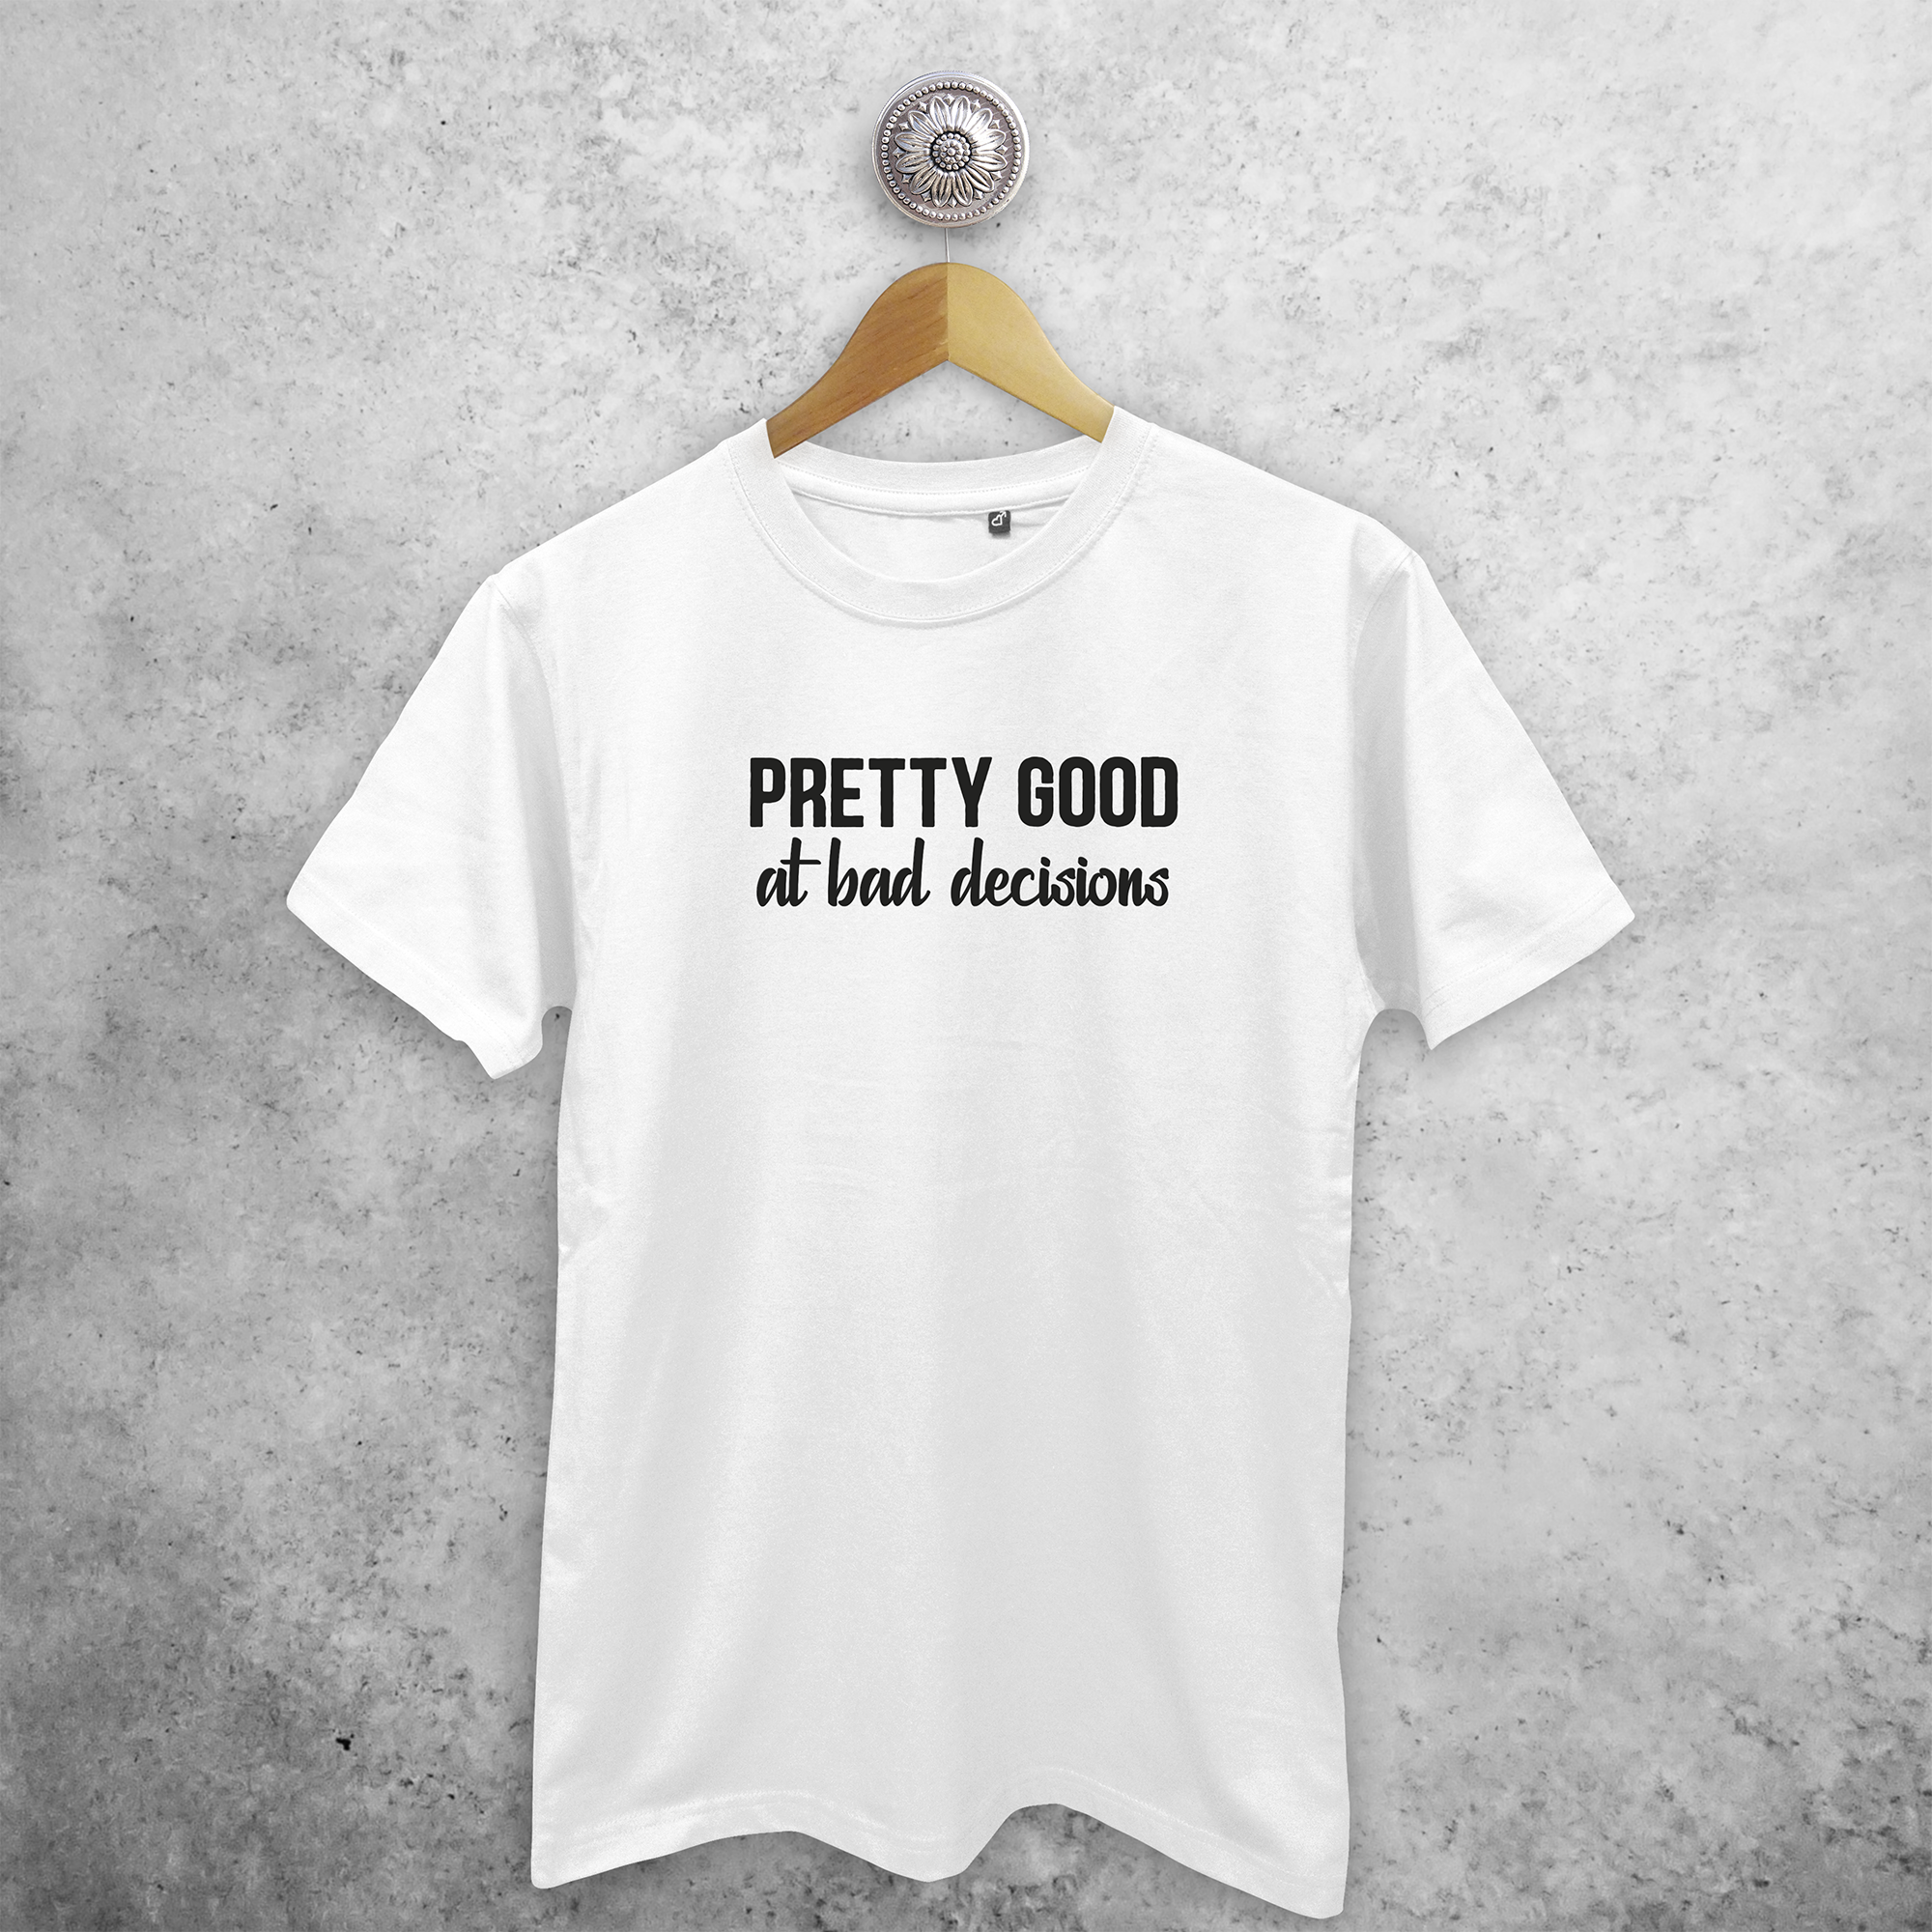 'Pretty good at bad decisions' adult shirt